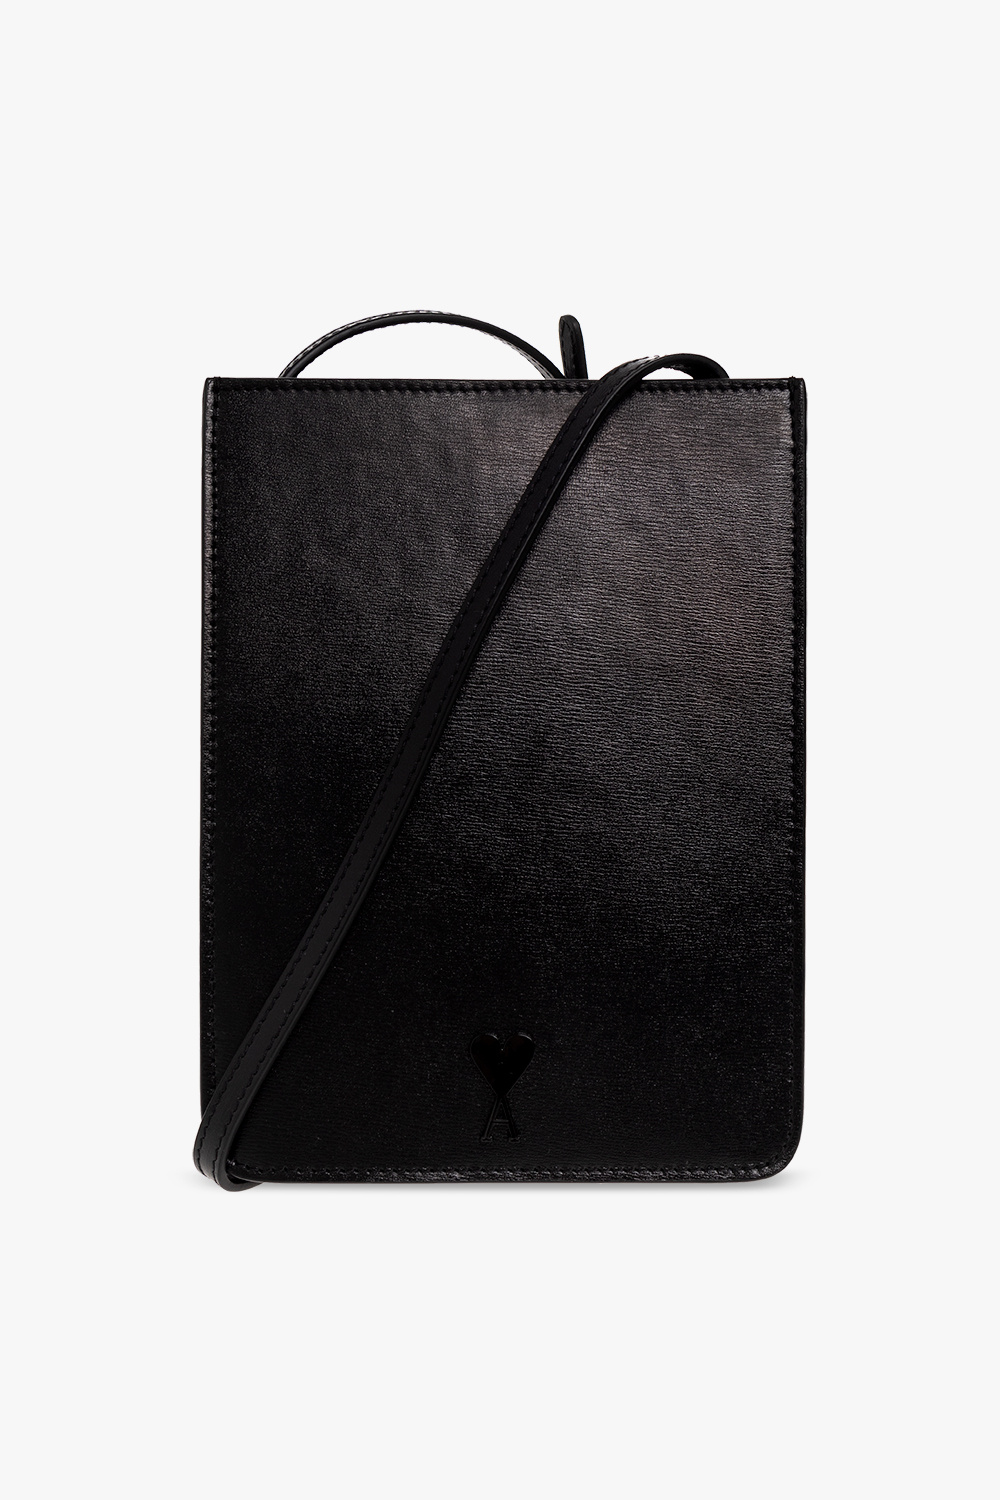 Ami Alexandre Mattiussi moschino logo drawstring bag Paraty item